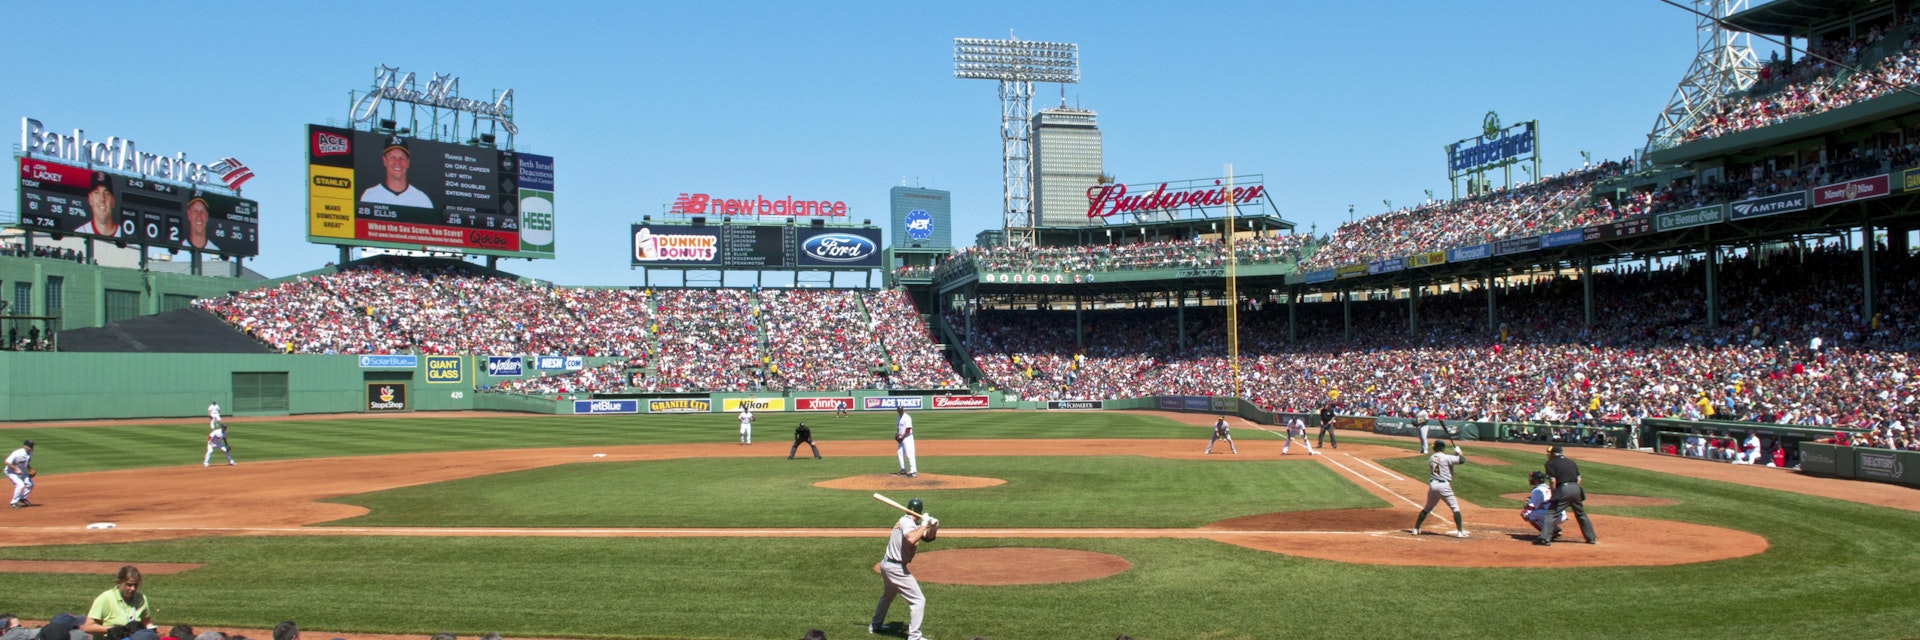 Baseball game, Boston Red Sox Nation, Fenway Park, Boston, Massachusetts, USA